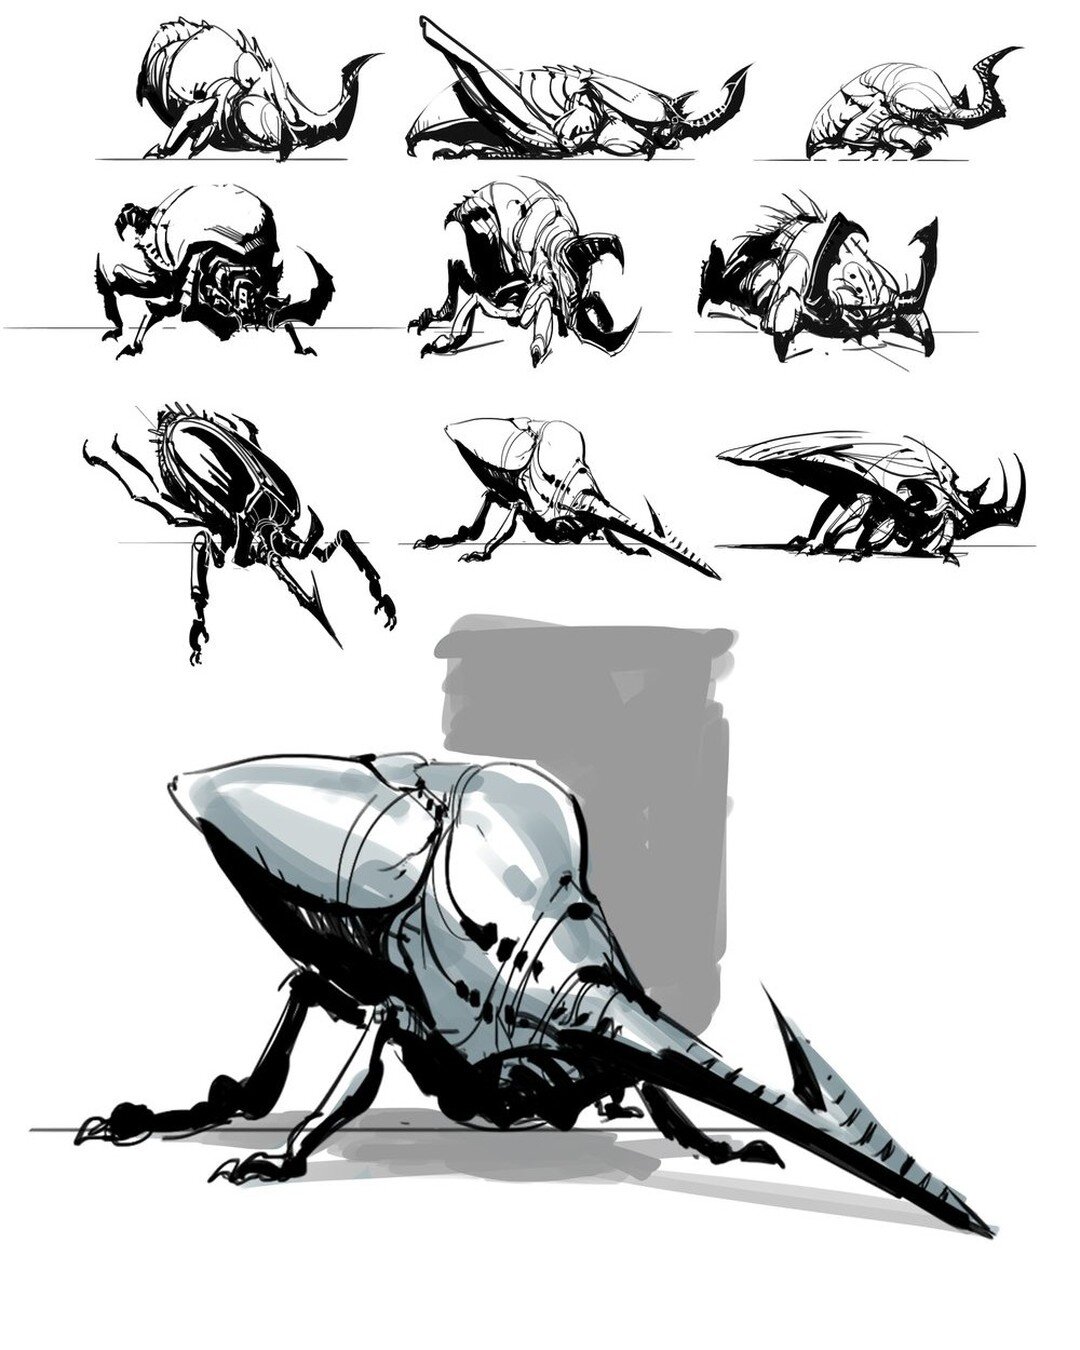 I love designing creatures! Loads of new art up on my website: www.izzymedrano.com

#critters #creaturedesign #conceptart #monsterdesign #gamedevjobs